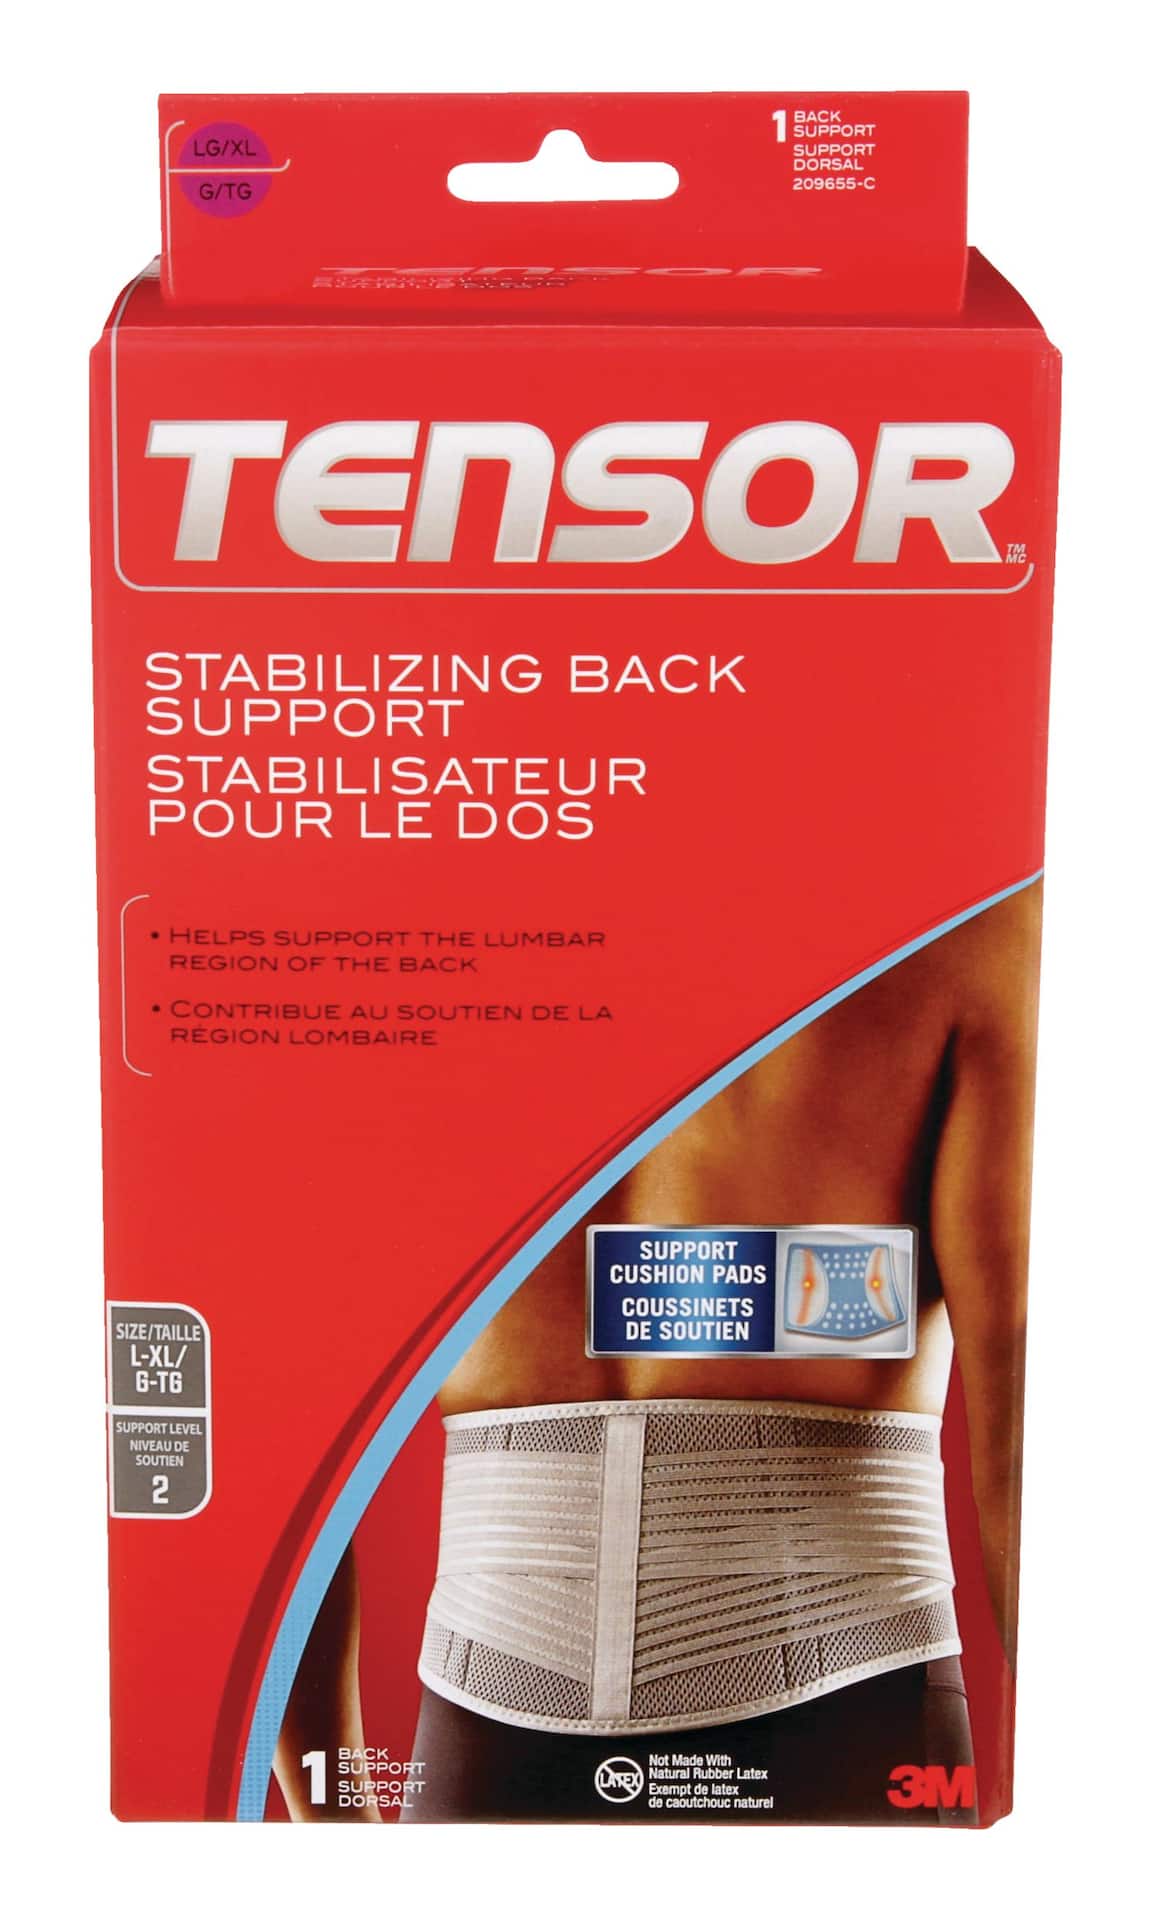 Tensor Adjustable Back Brace - One Size